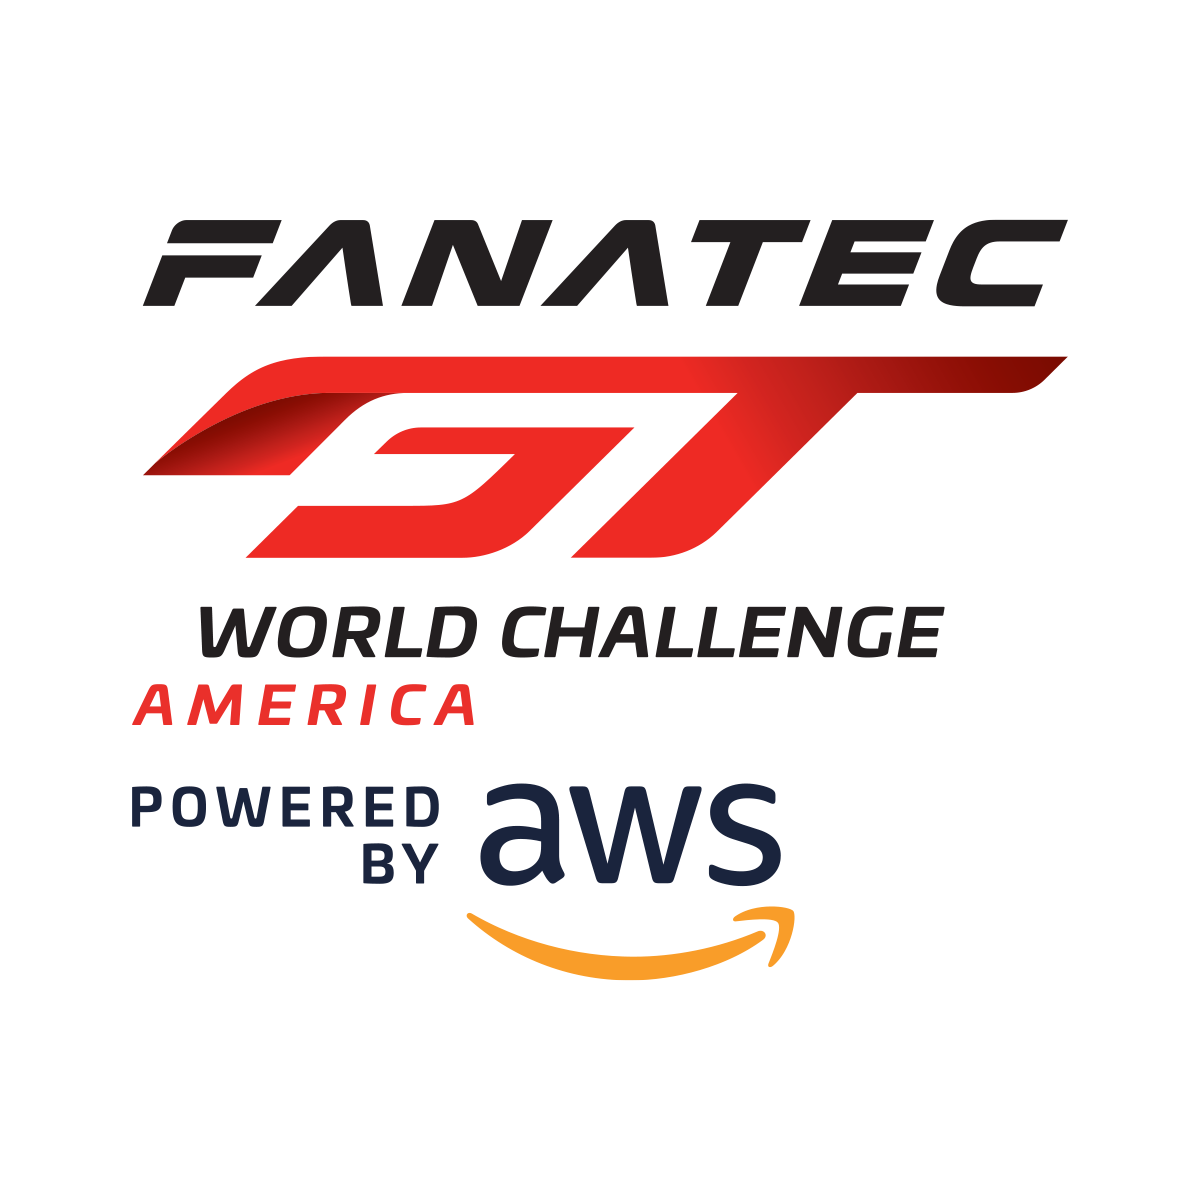 www.gt-world-challenge-america.com